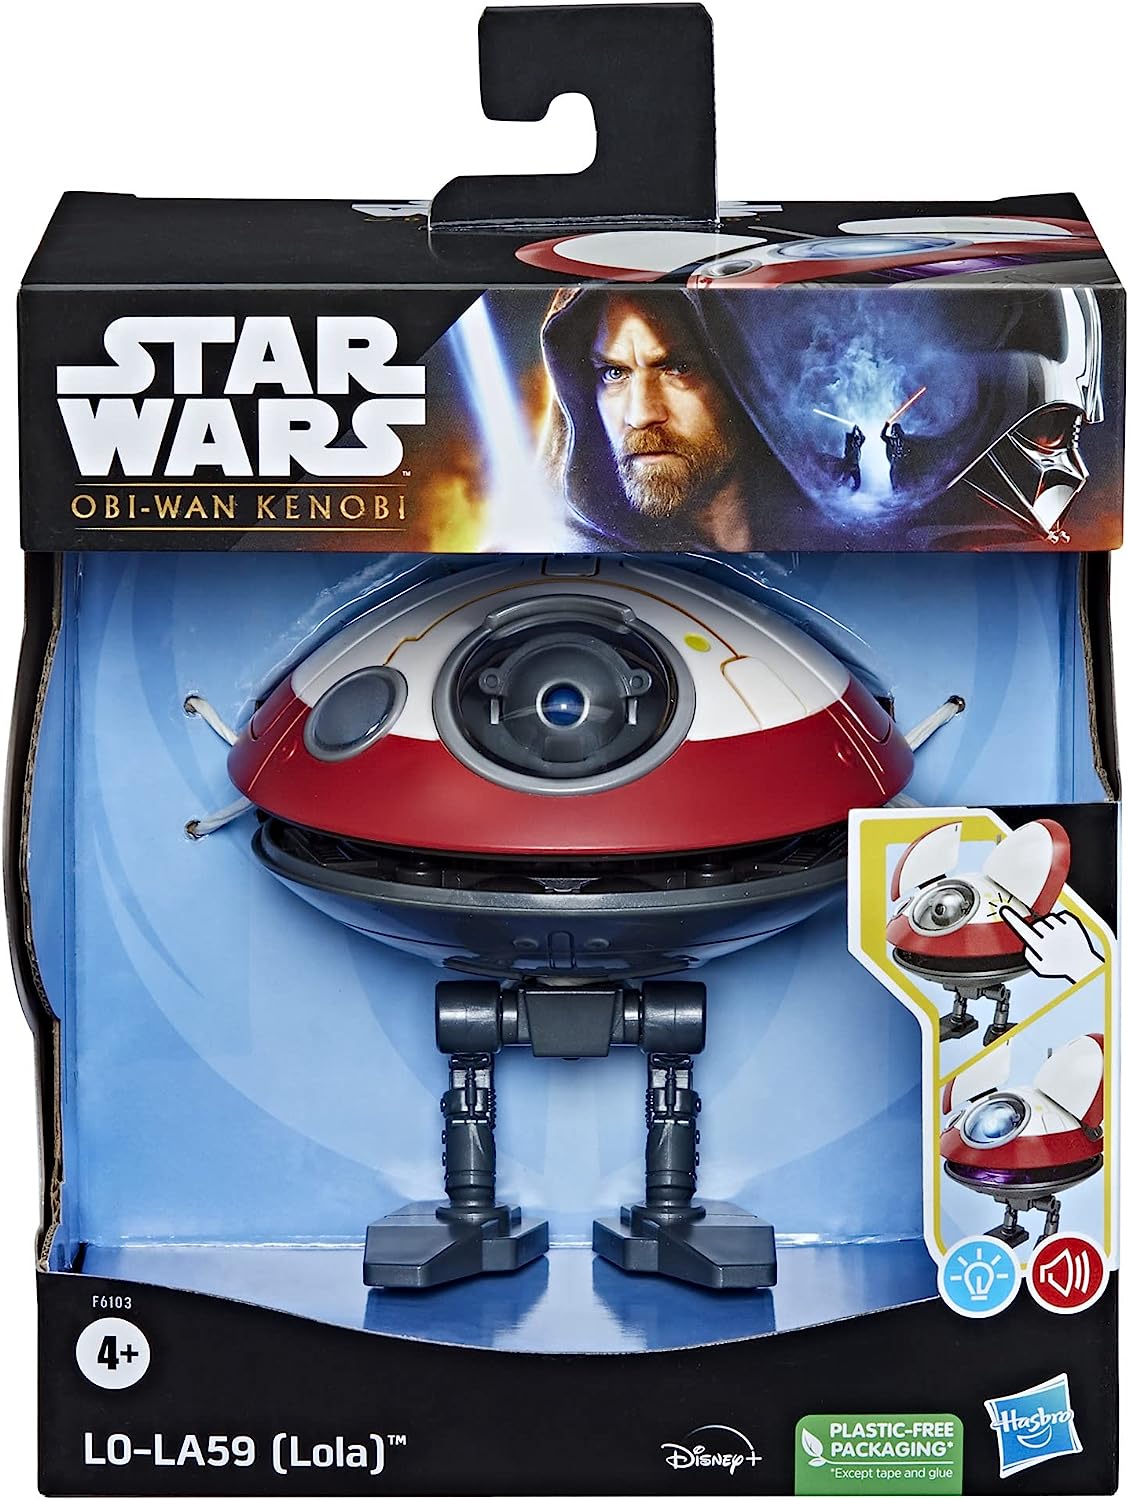 Hasbro Star Wars | L0-LA59 (Lola) Interactive Electronic Figure | Obi-Wan Kenobi